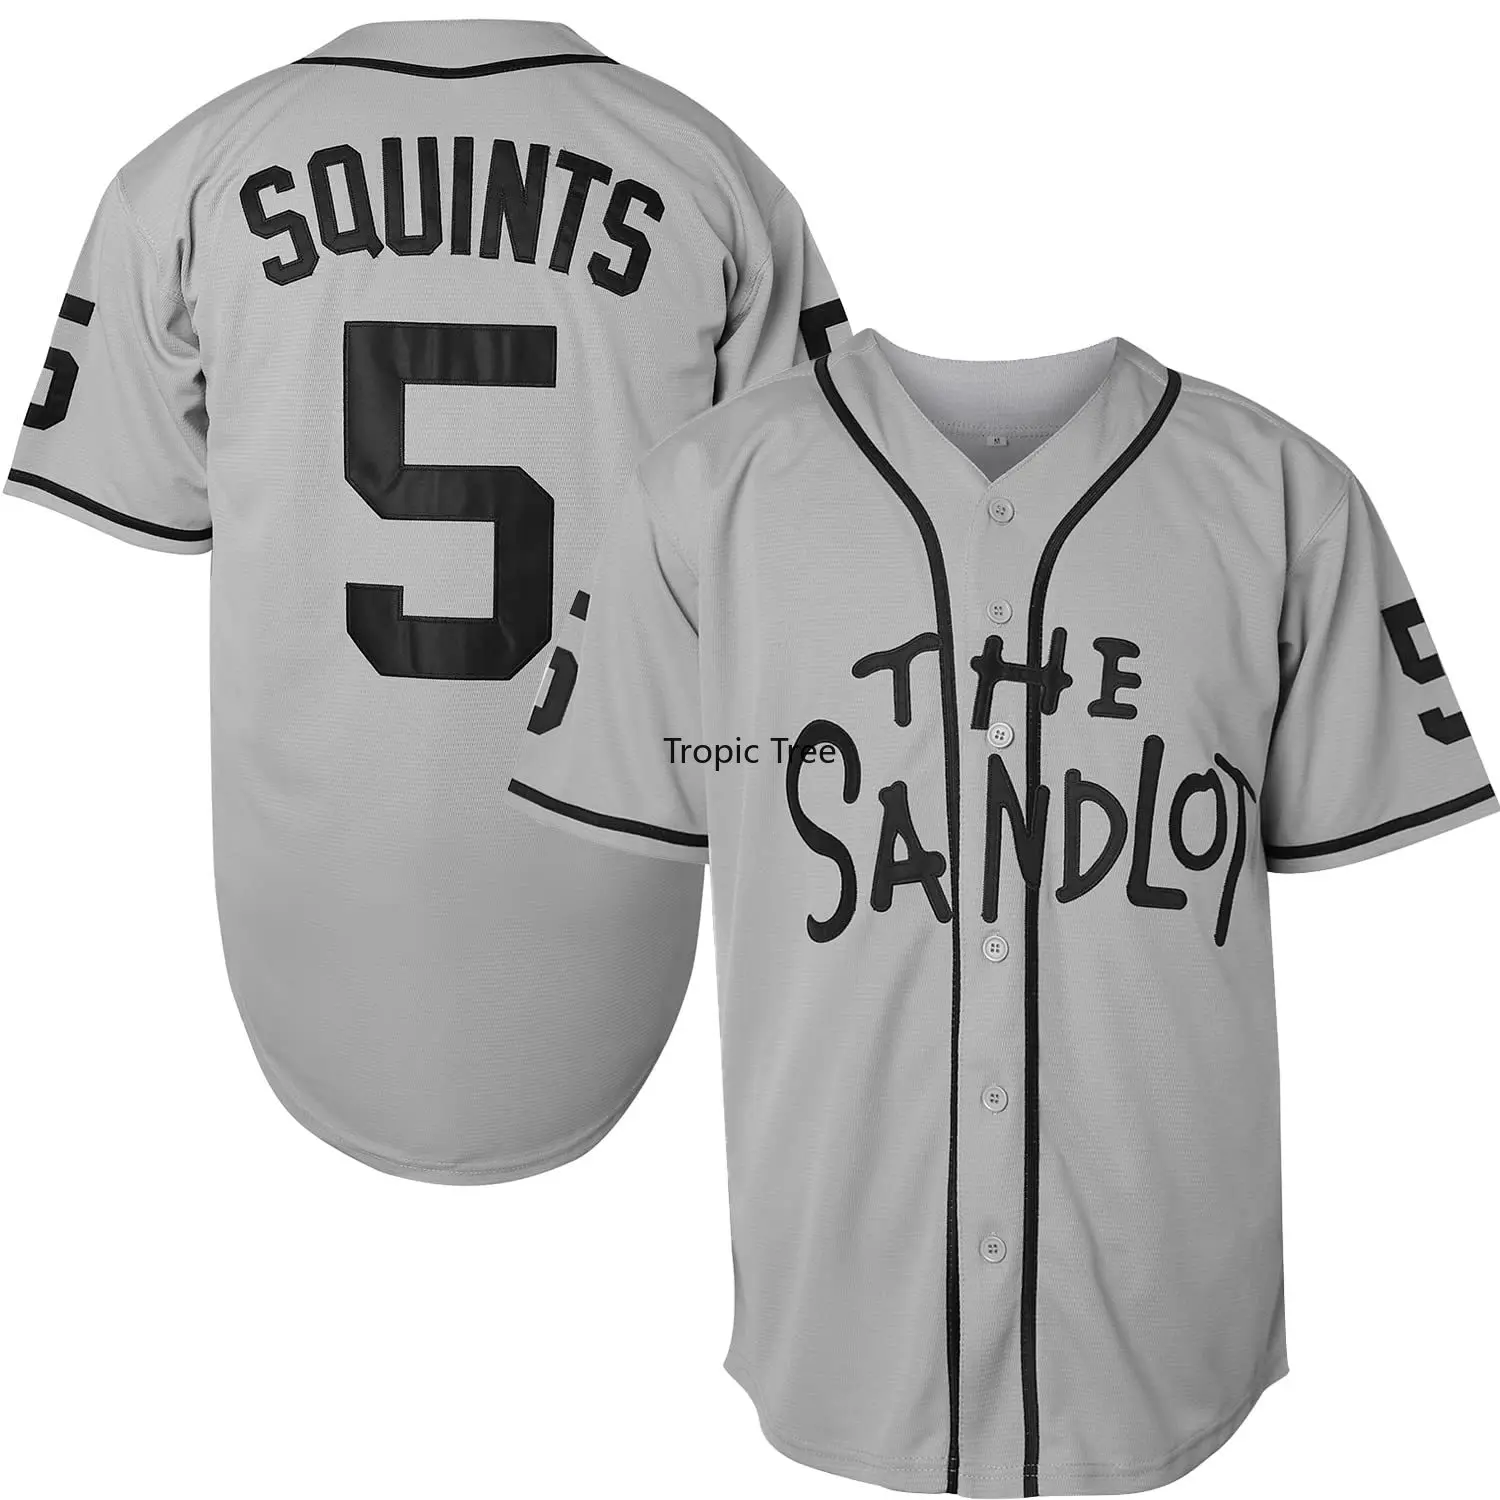 The Sandlot Baseball Jersey TWS by Vinco XL